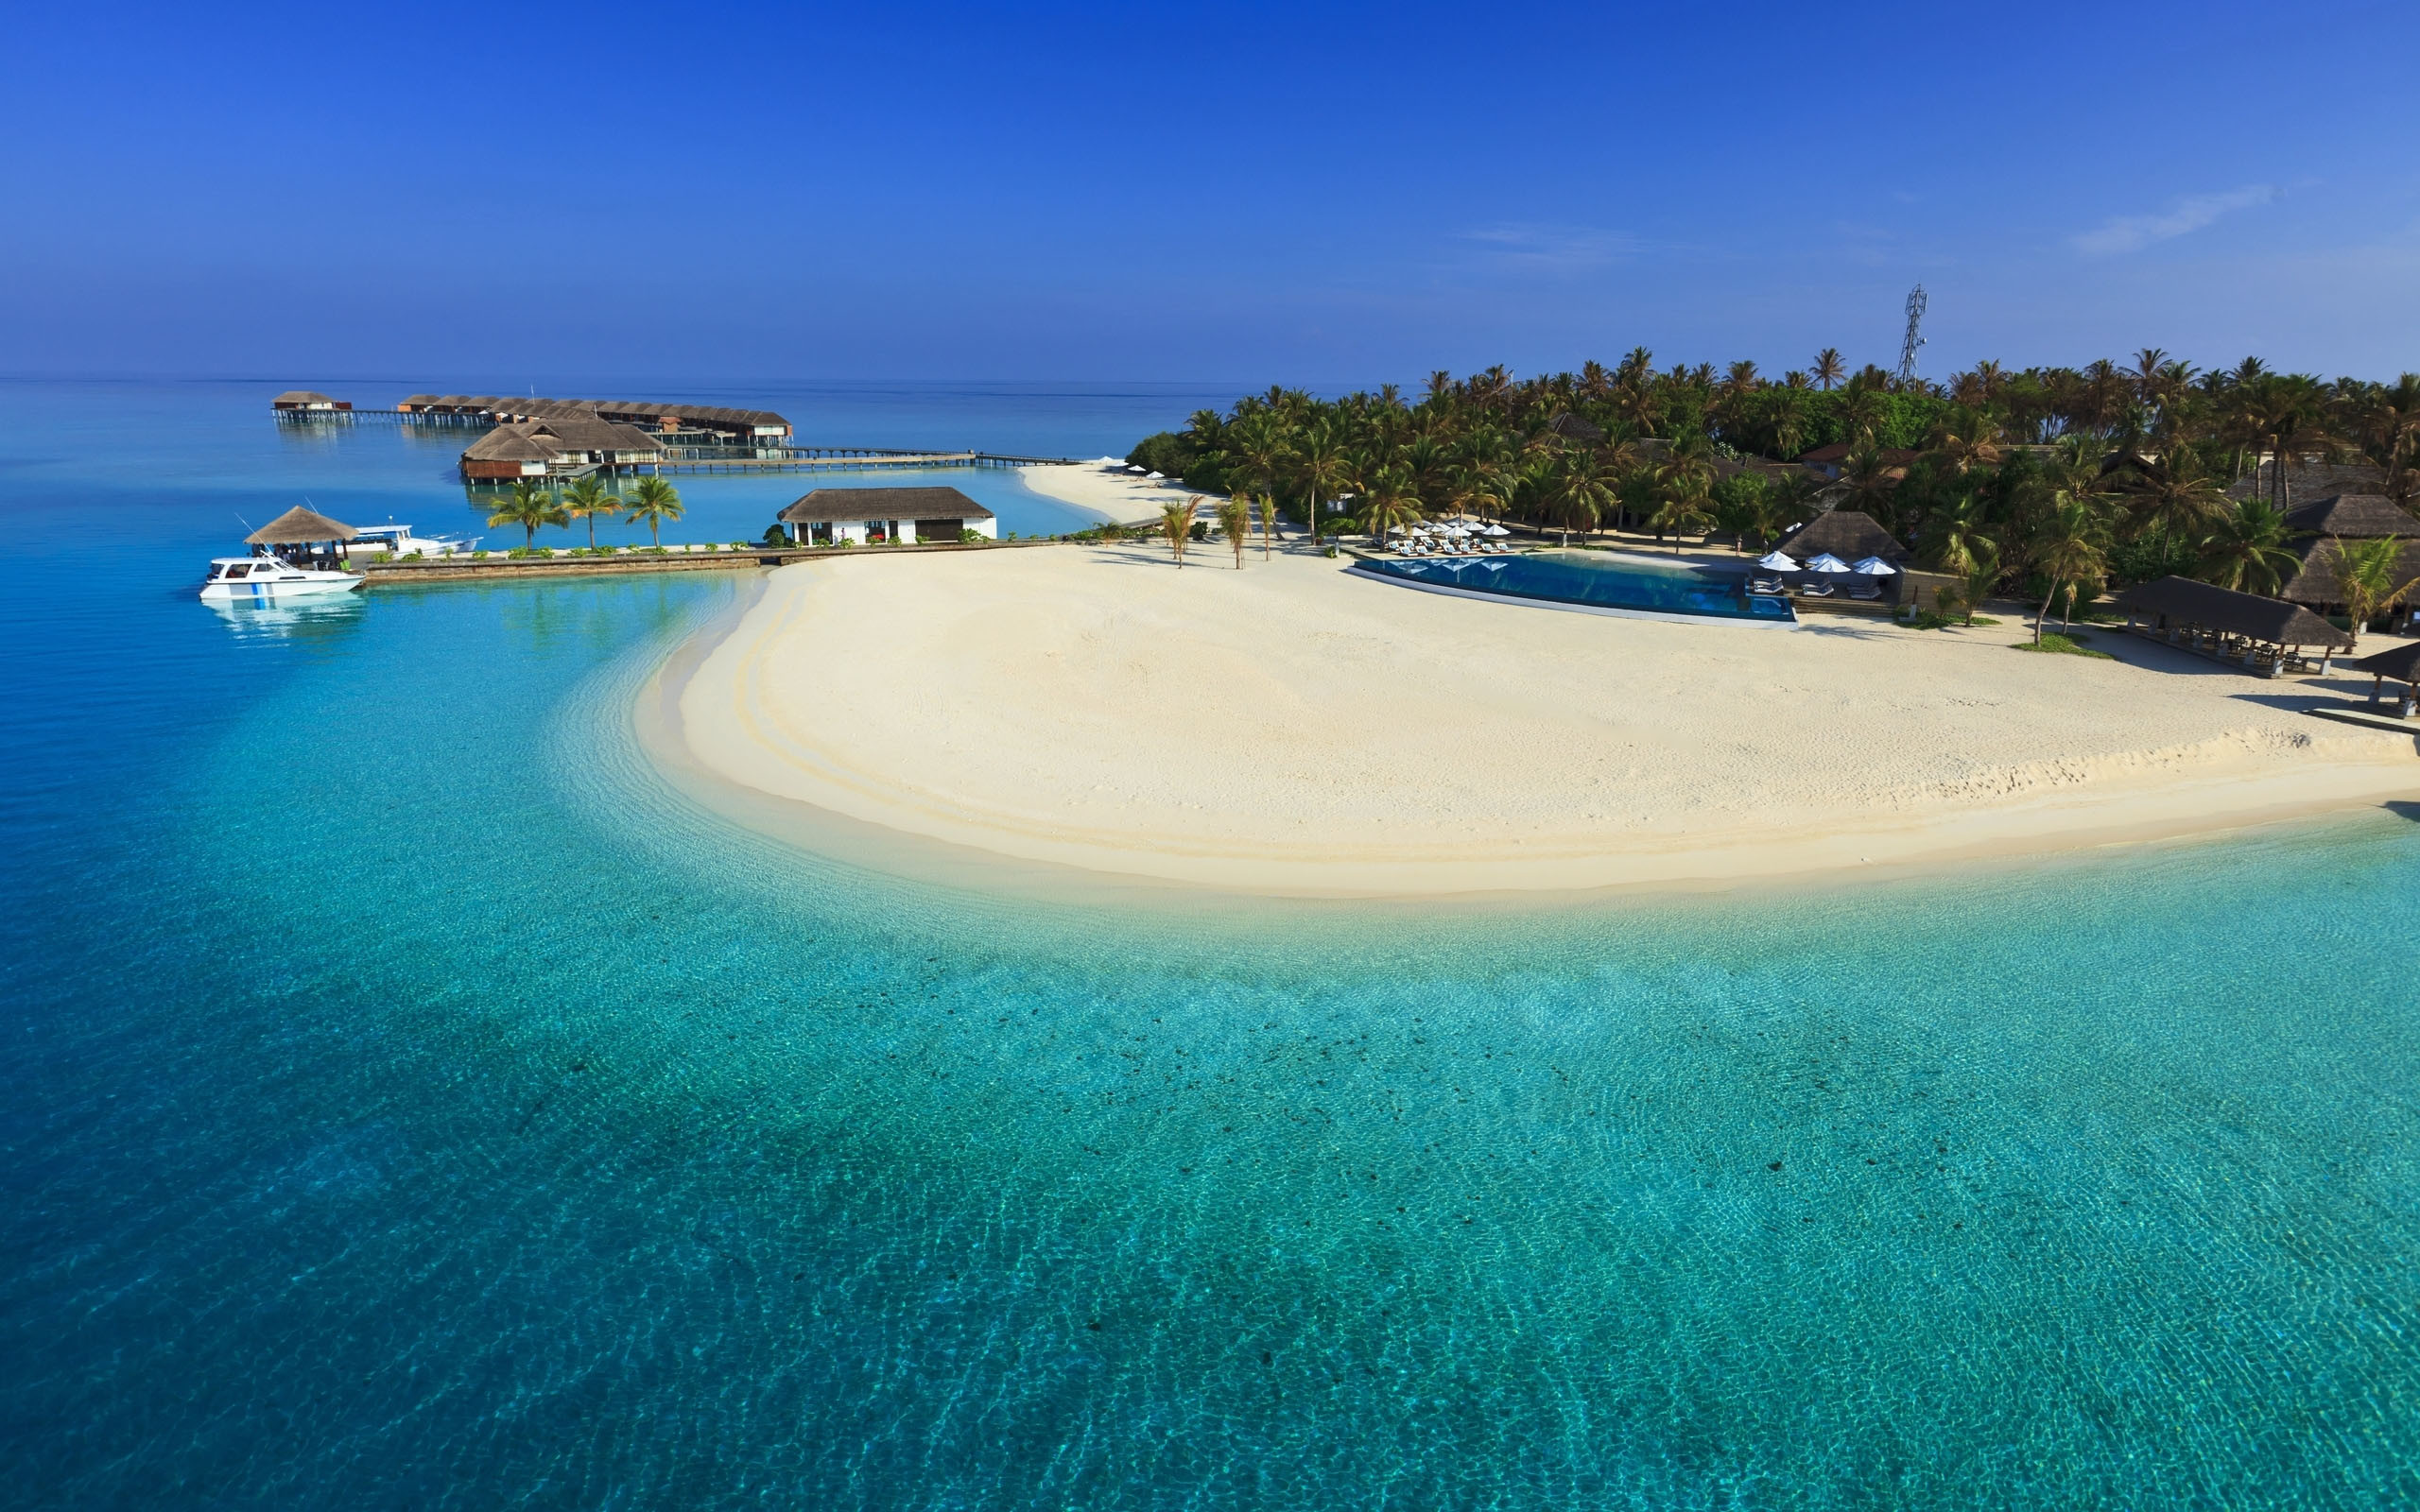 2560x1600 Explore Beautiful Beach, Beautiful Places, and more! Maldives Luxury Resort  Iphone Panoramic Wallpaper ...